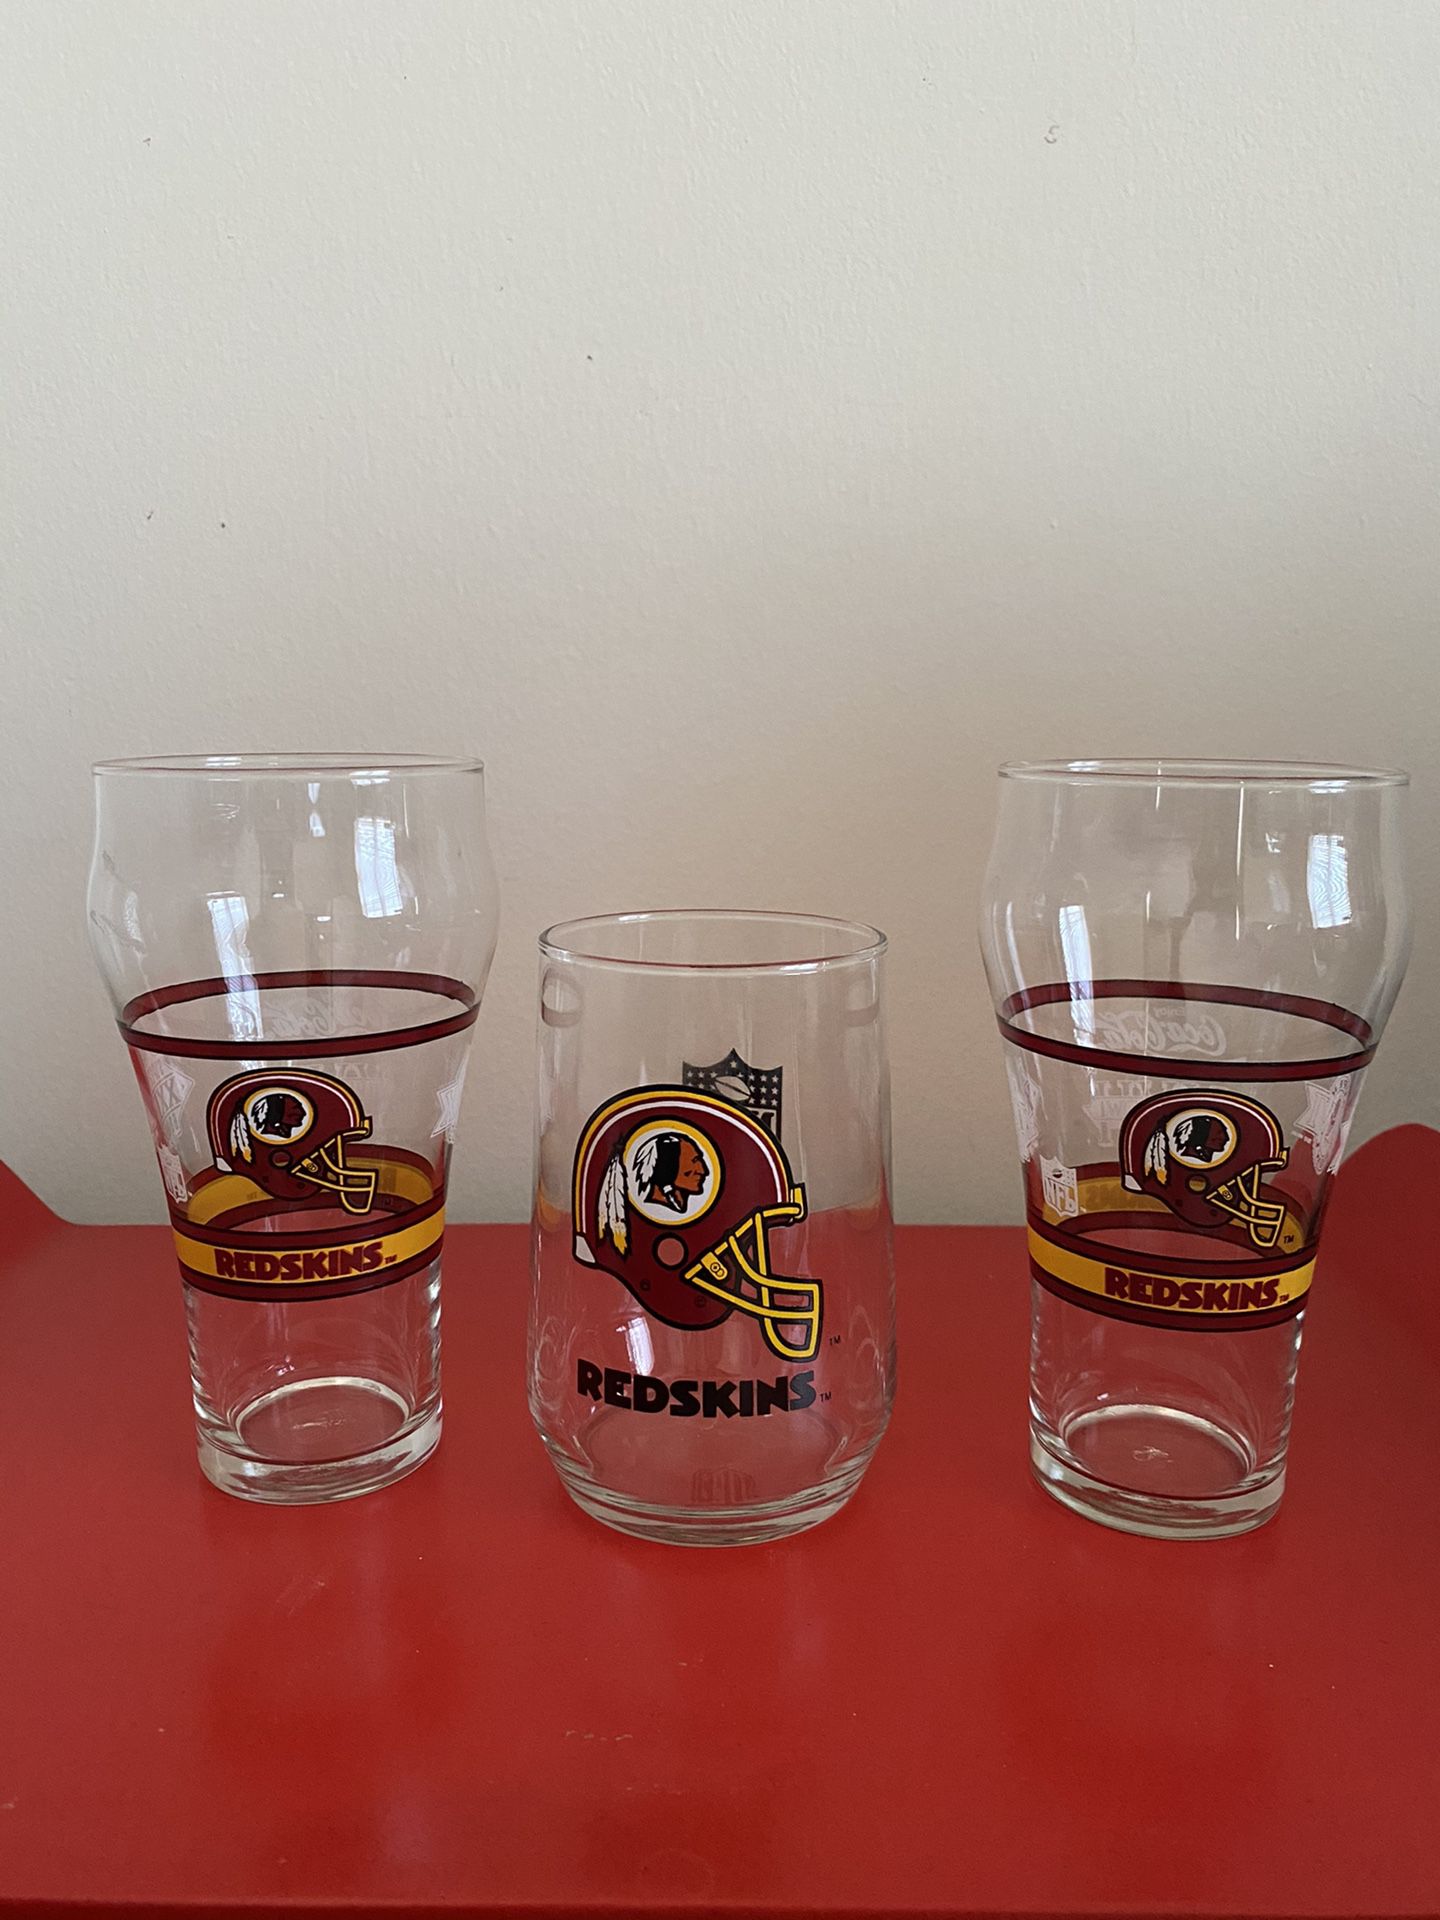 Redskins glass cups